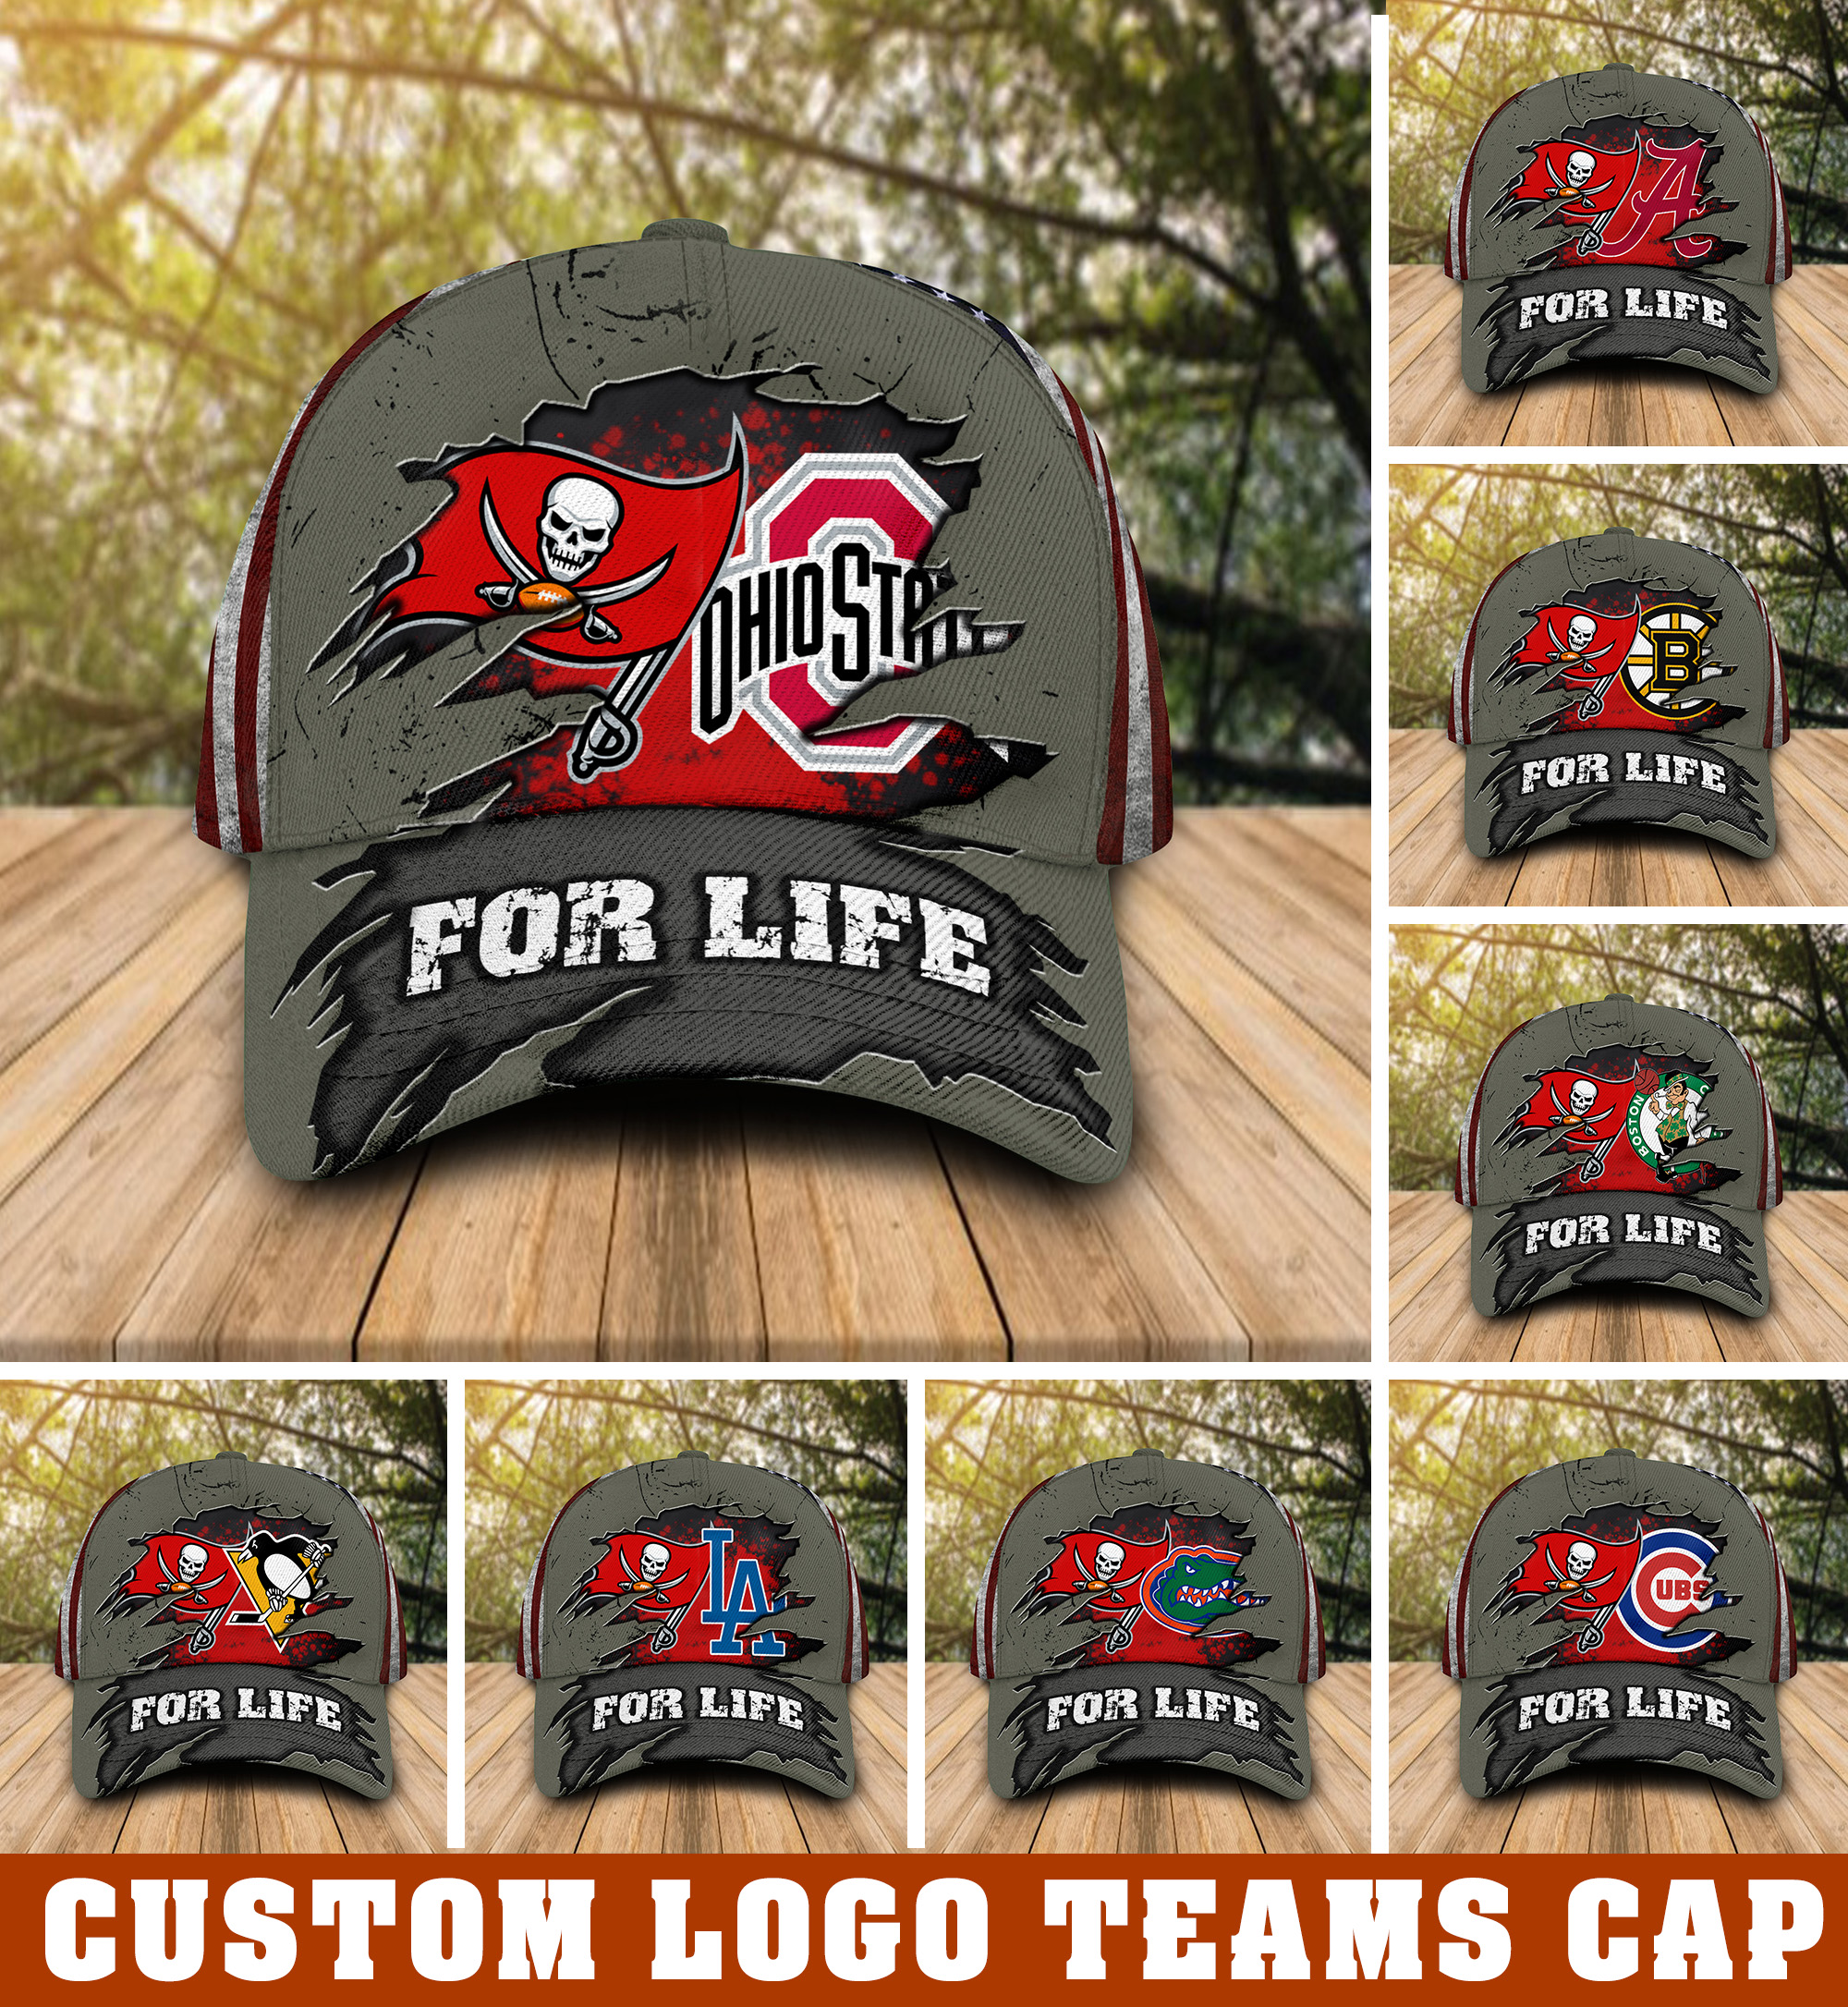 Custom logo Sport teams For Life Cap